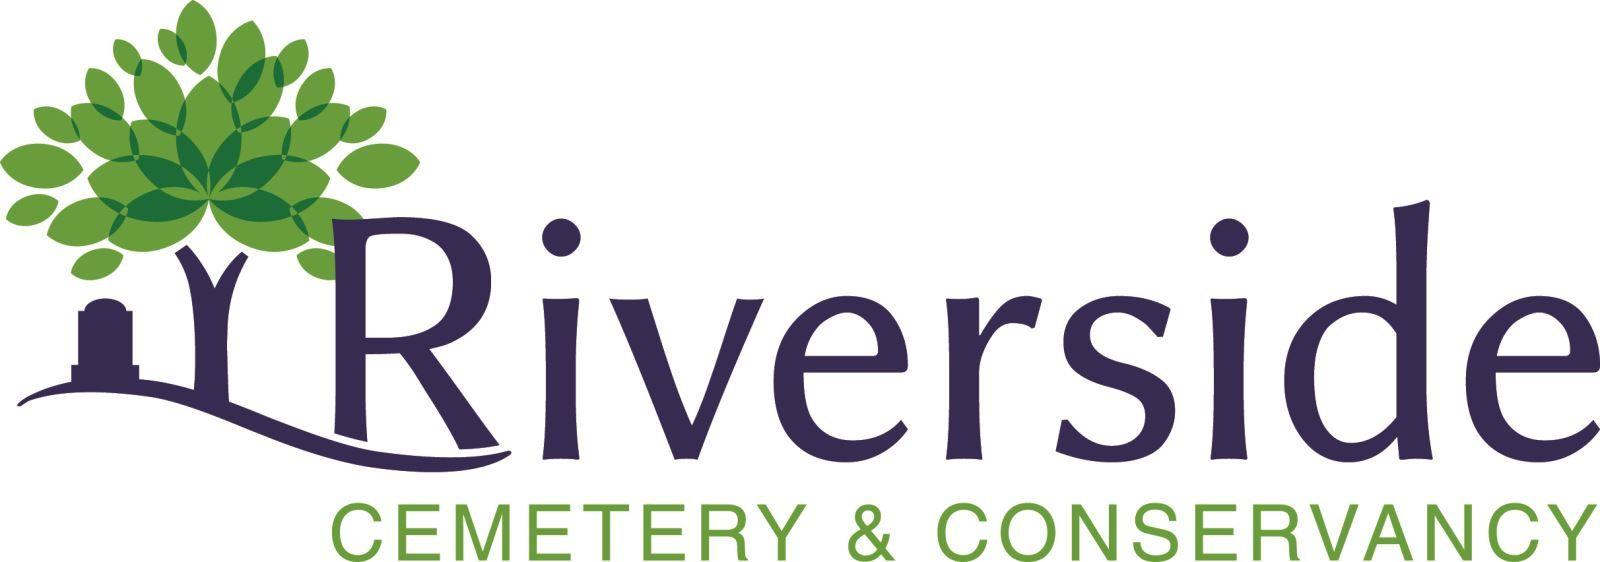 Cemetery Logo - Historic Riverside Cemetery Conservancy